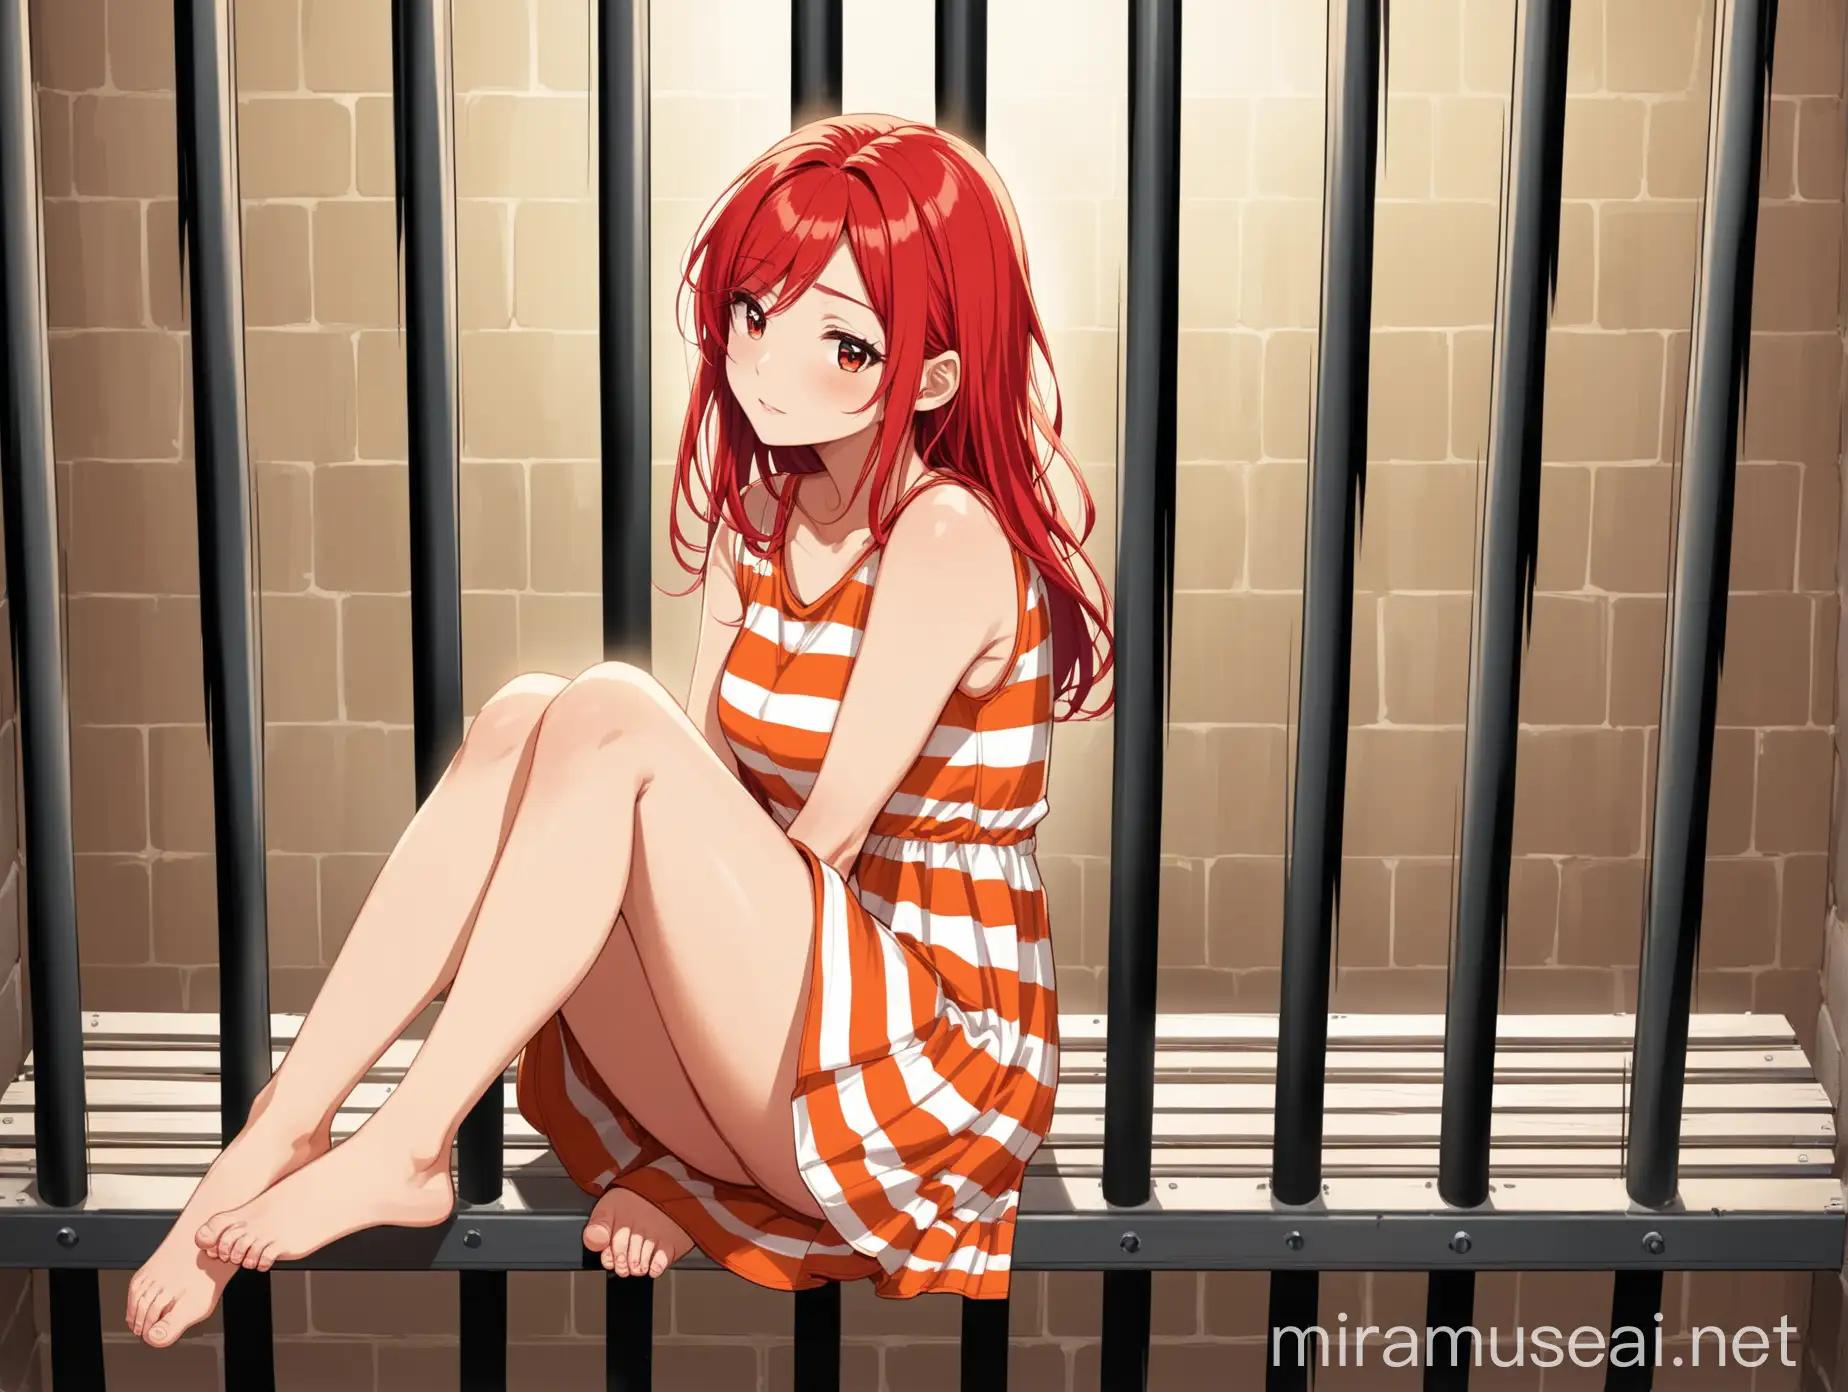 RedHaired Prisoner Resting Behind Bars in Short Dress